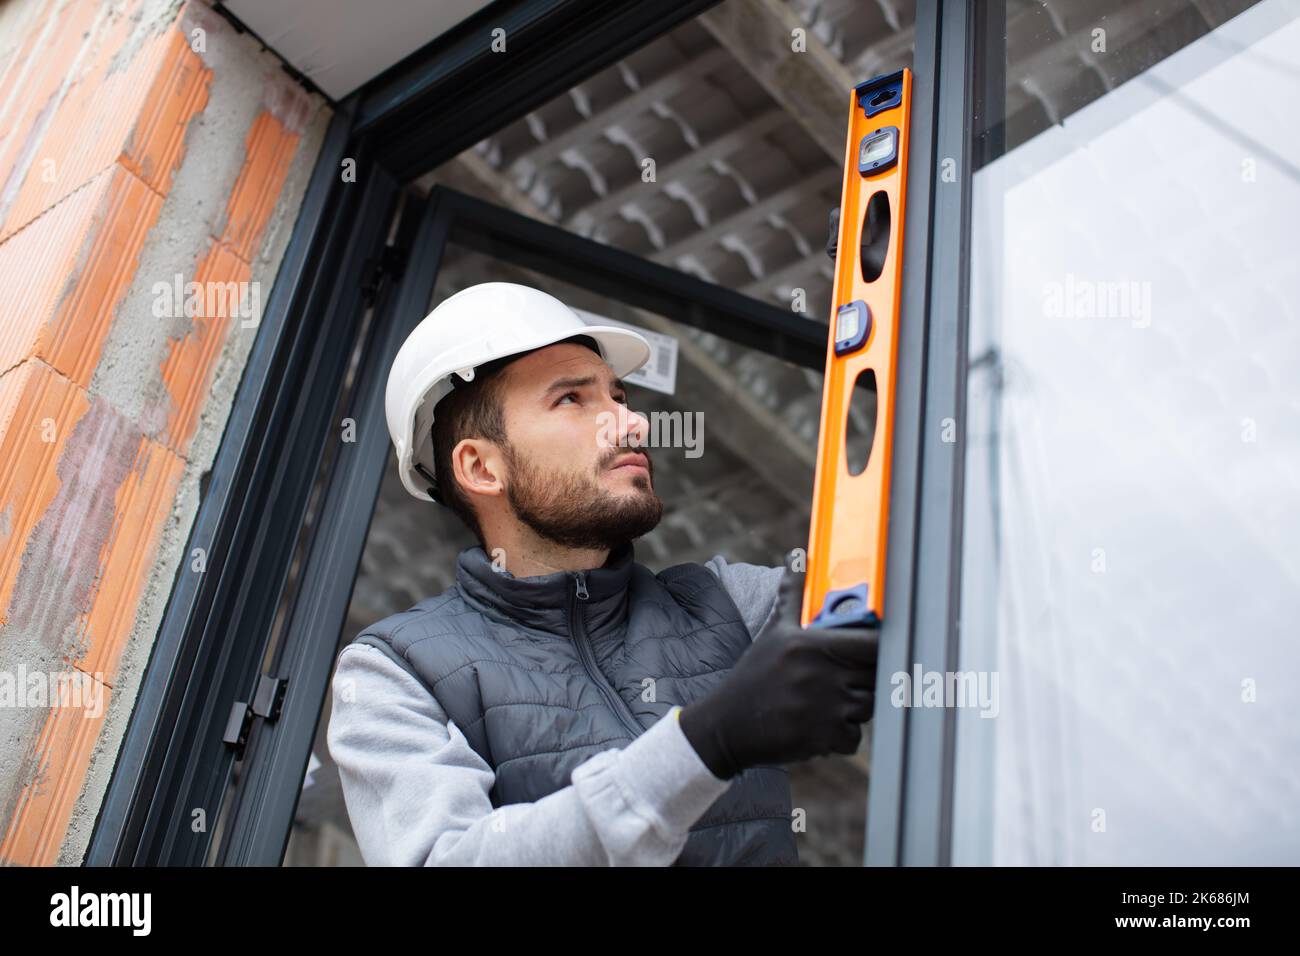 workman in uniform mounting windows checking their level Stock Photo